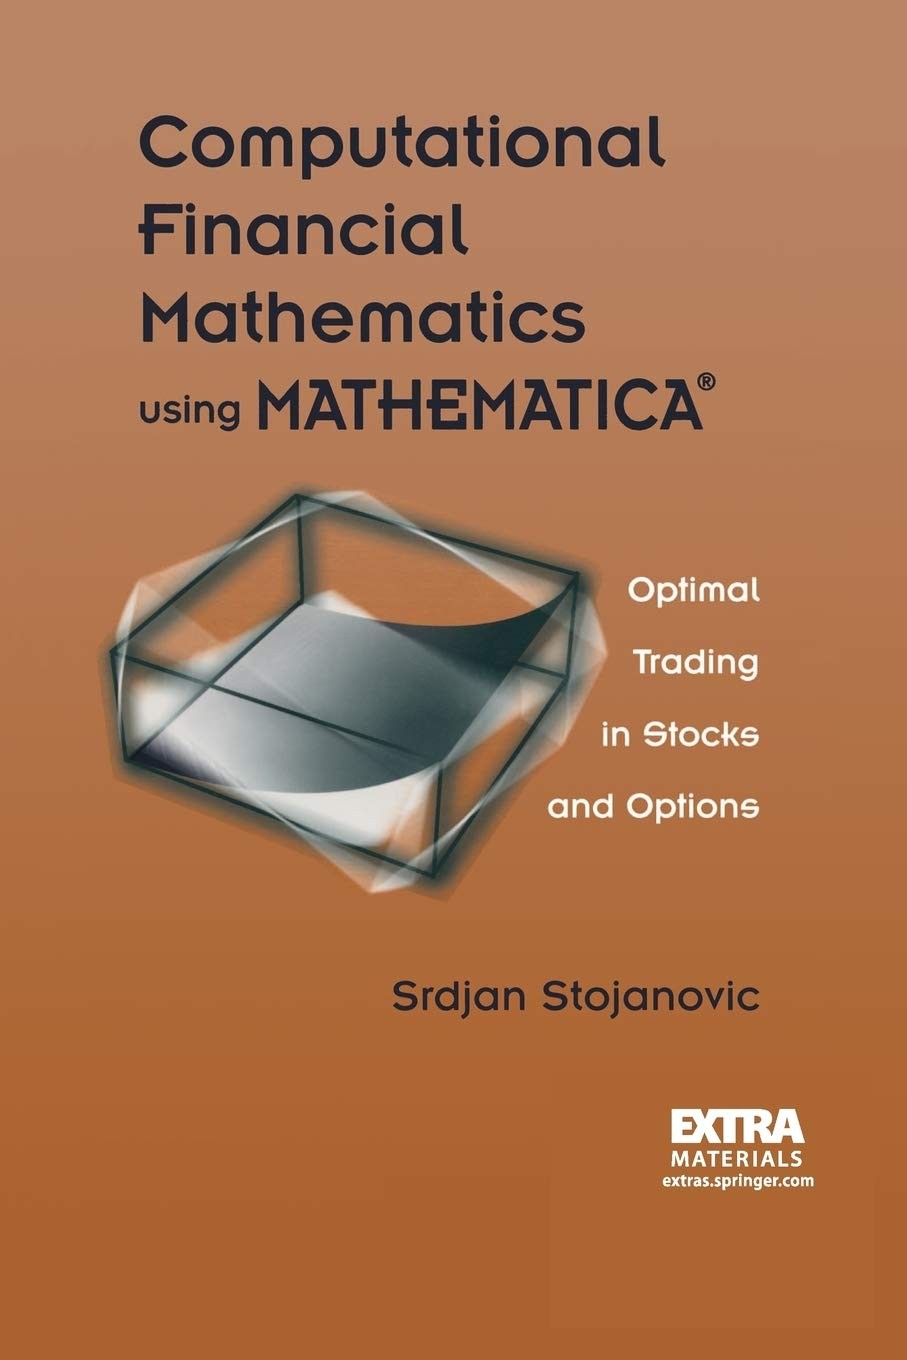 Computational Financial Mathematics using Mathematica®: Optimal Trading in Stocks and Options